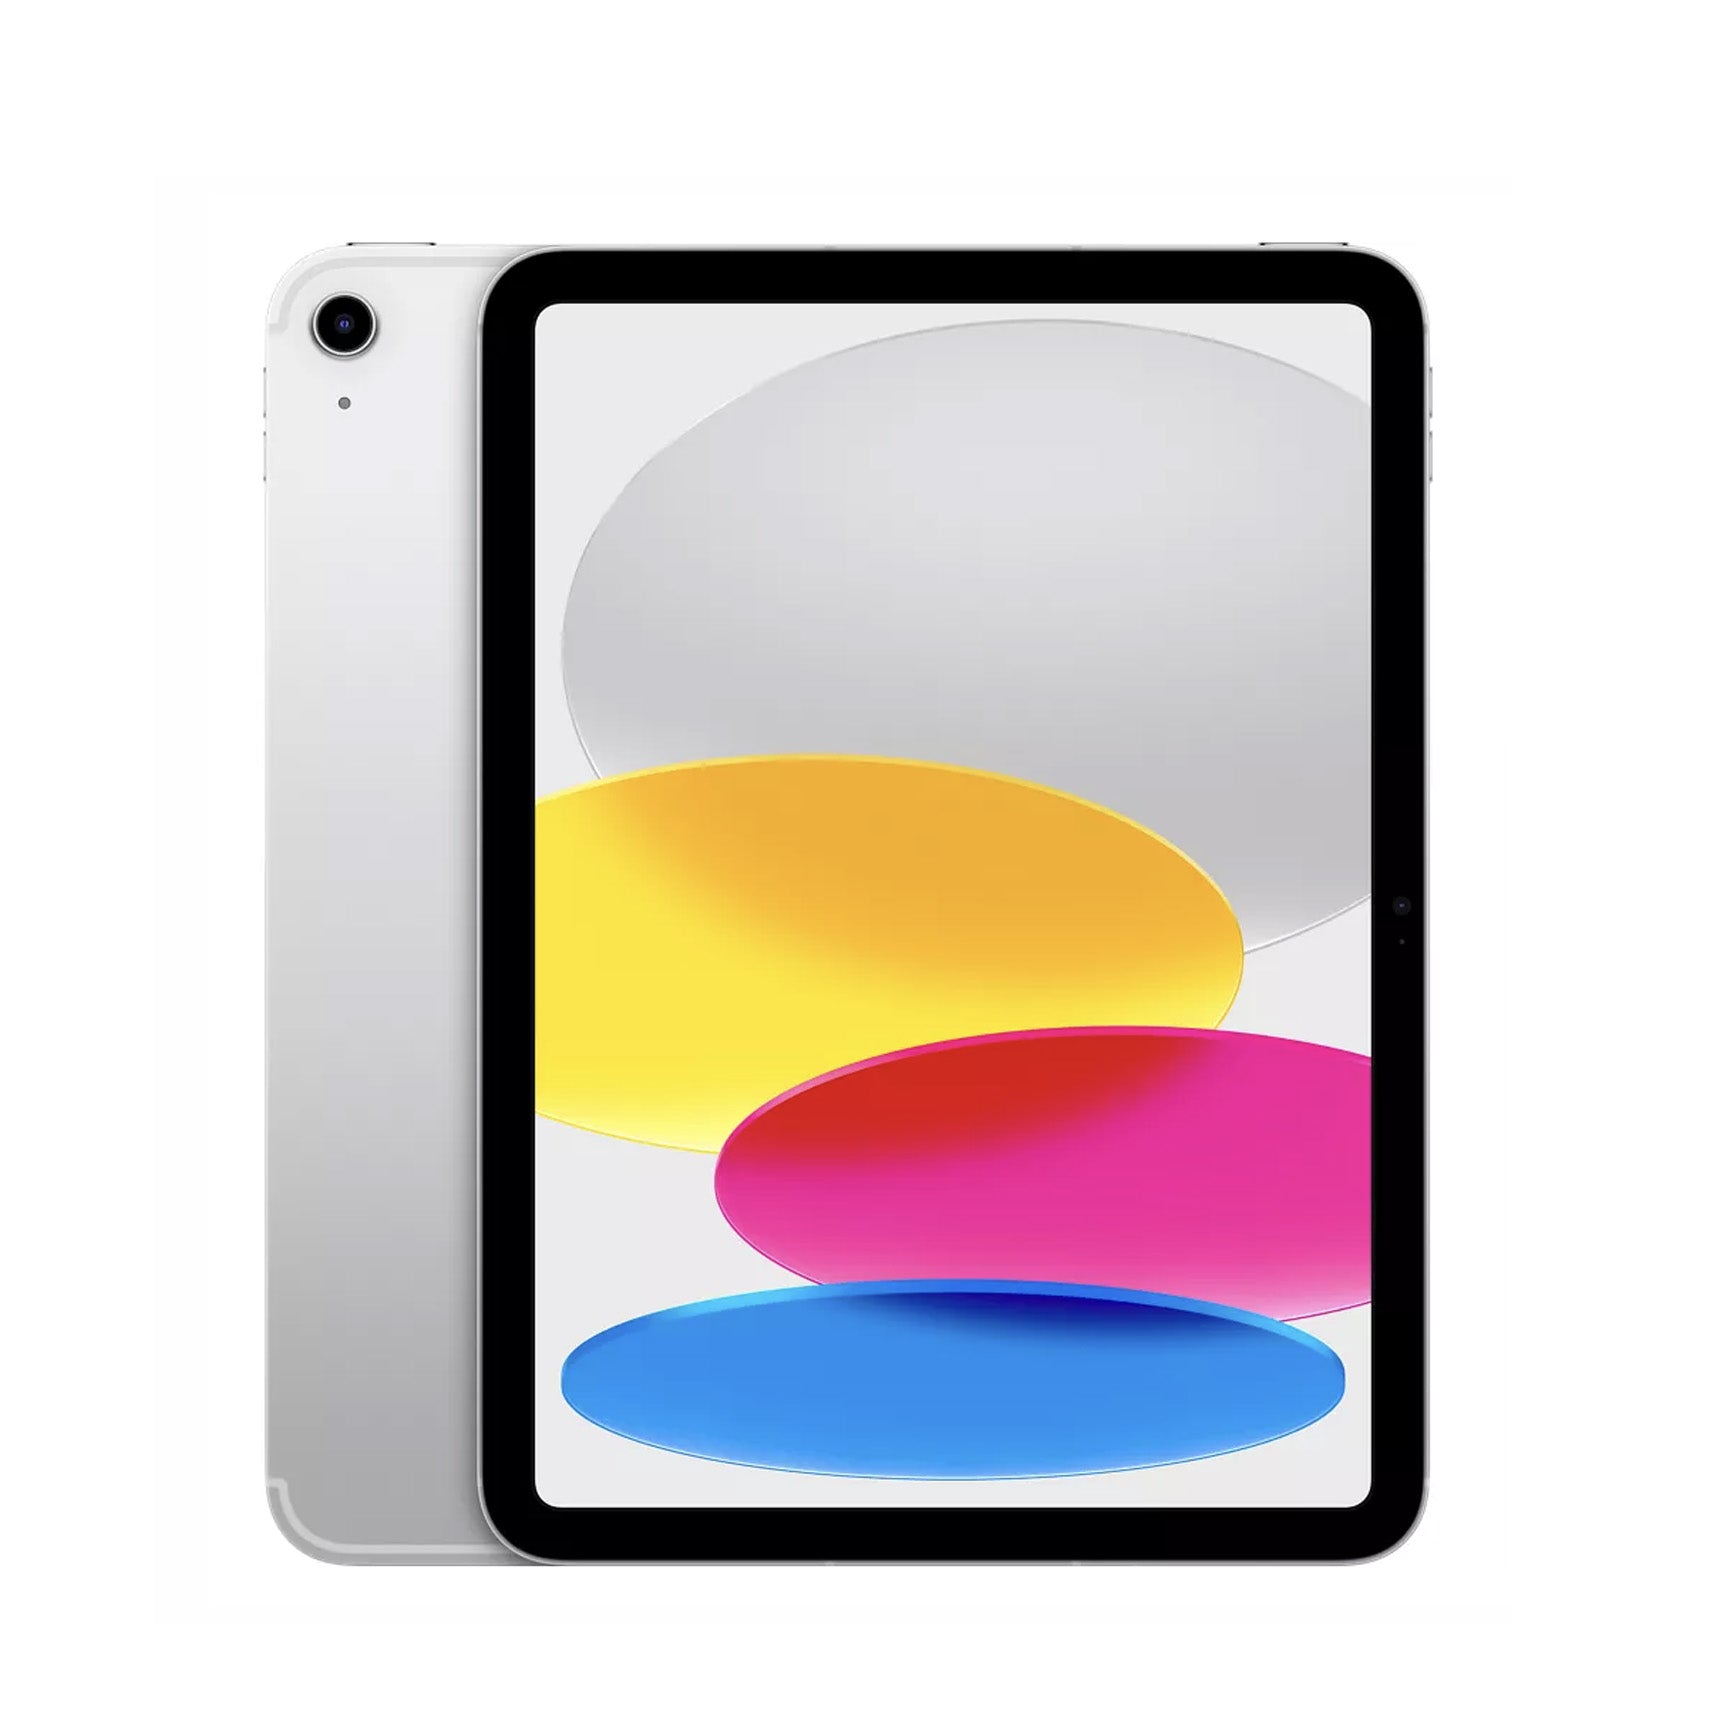 Apple iPad Deployment Backgrounds